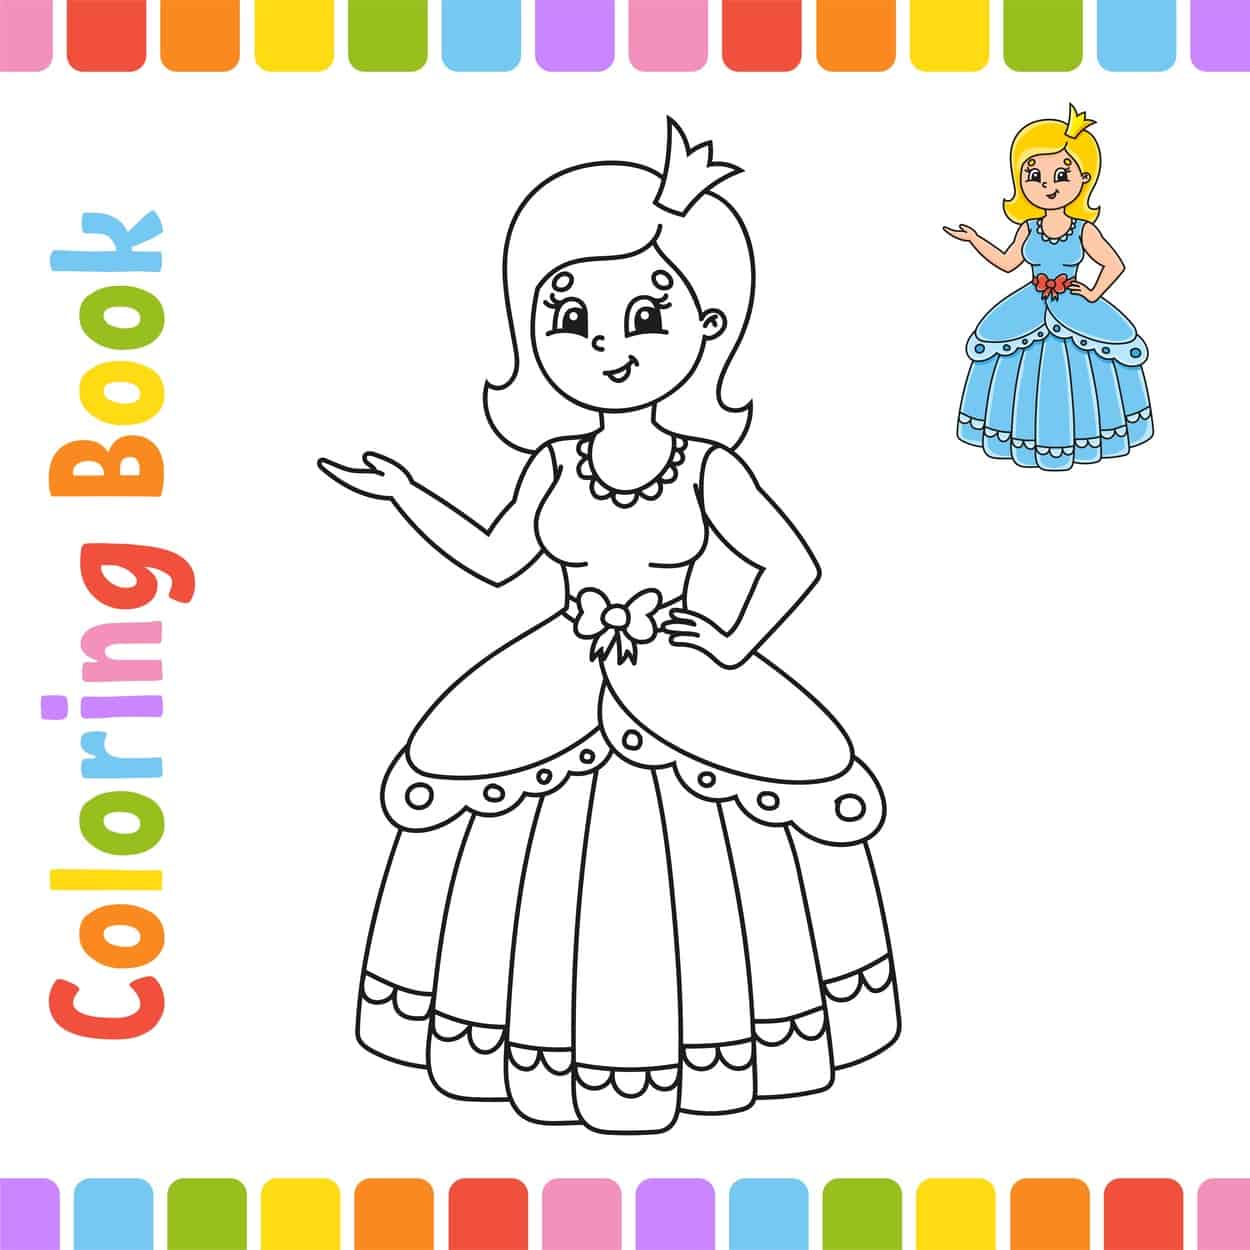 Princesa para colorir fácil-1